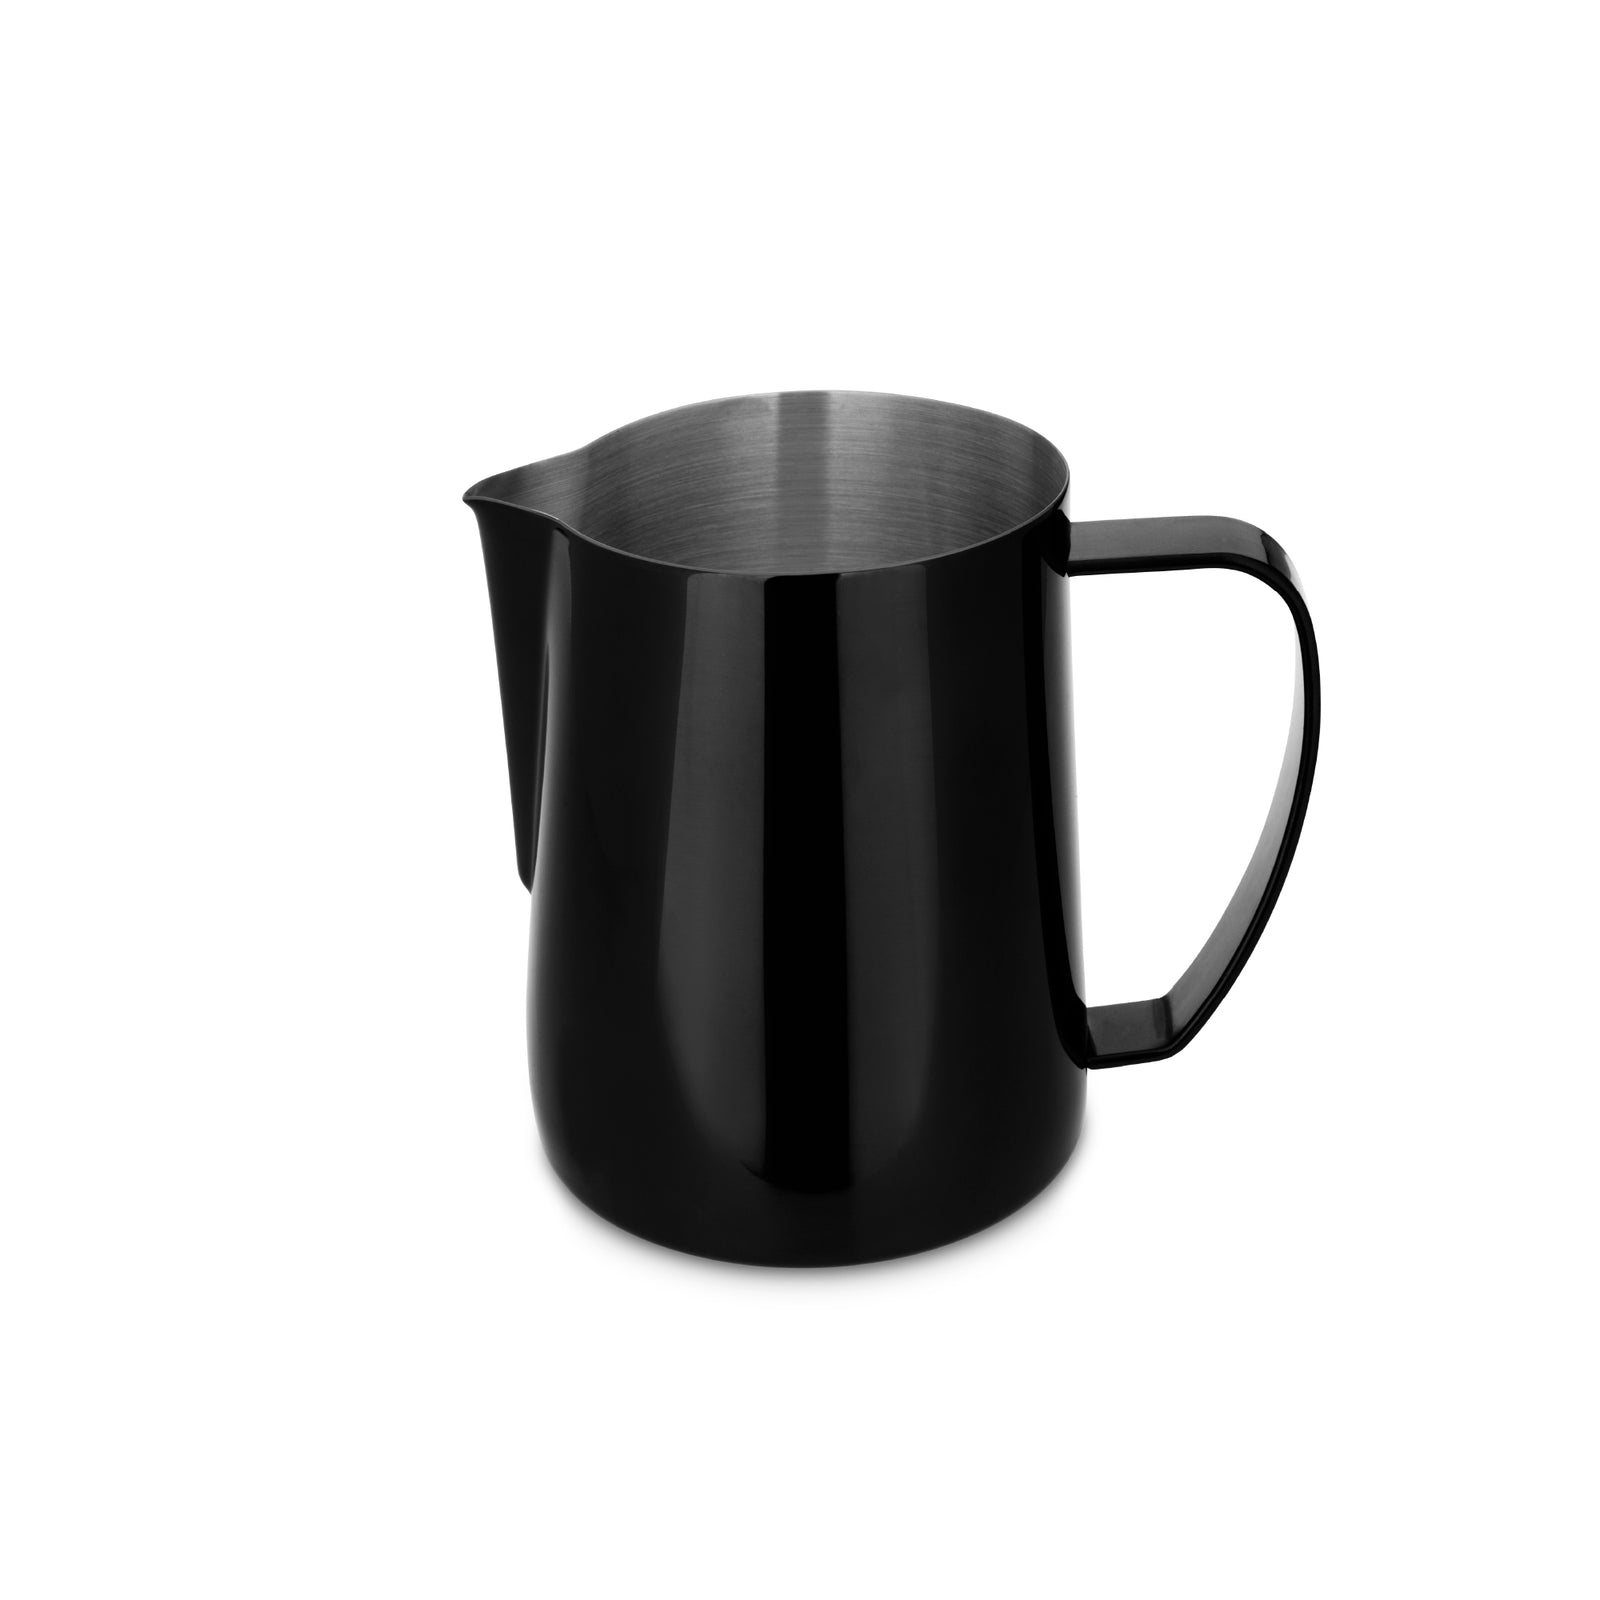 https://cdn.shopify.com/s/files/1/0293/4380/9620/products/espressoworks-milk-frothing-jug-stainless-steel-black-six-hundred-ml-01_1600x.jpg?v=1604995291